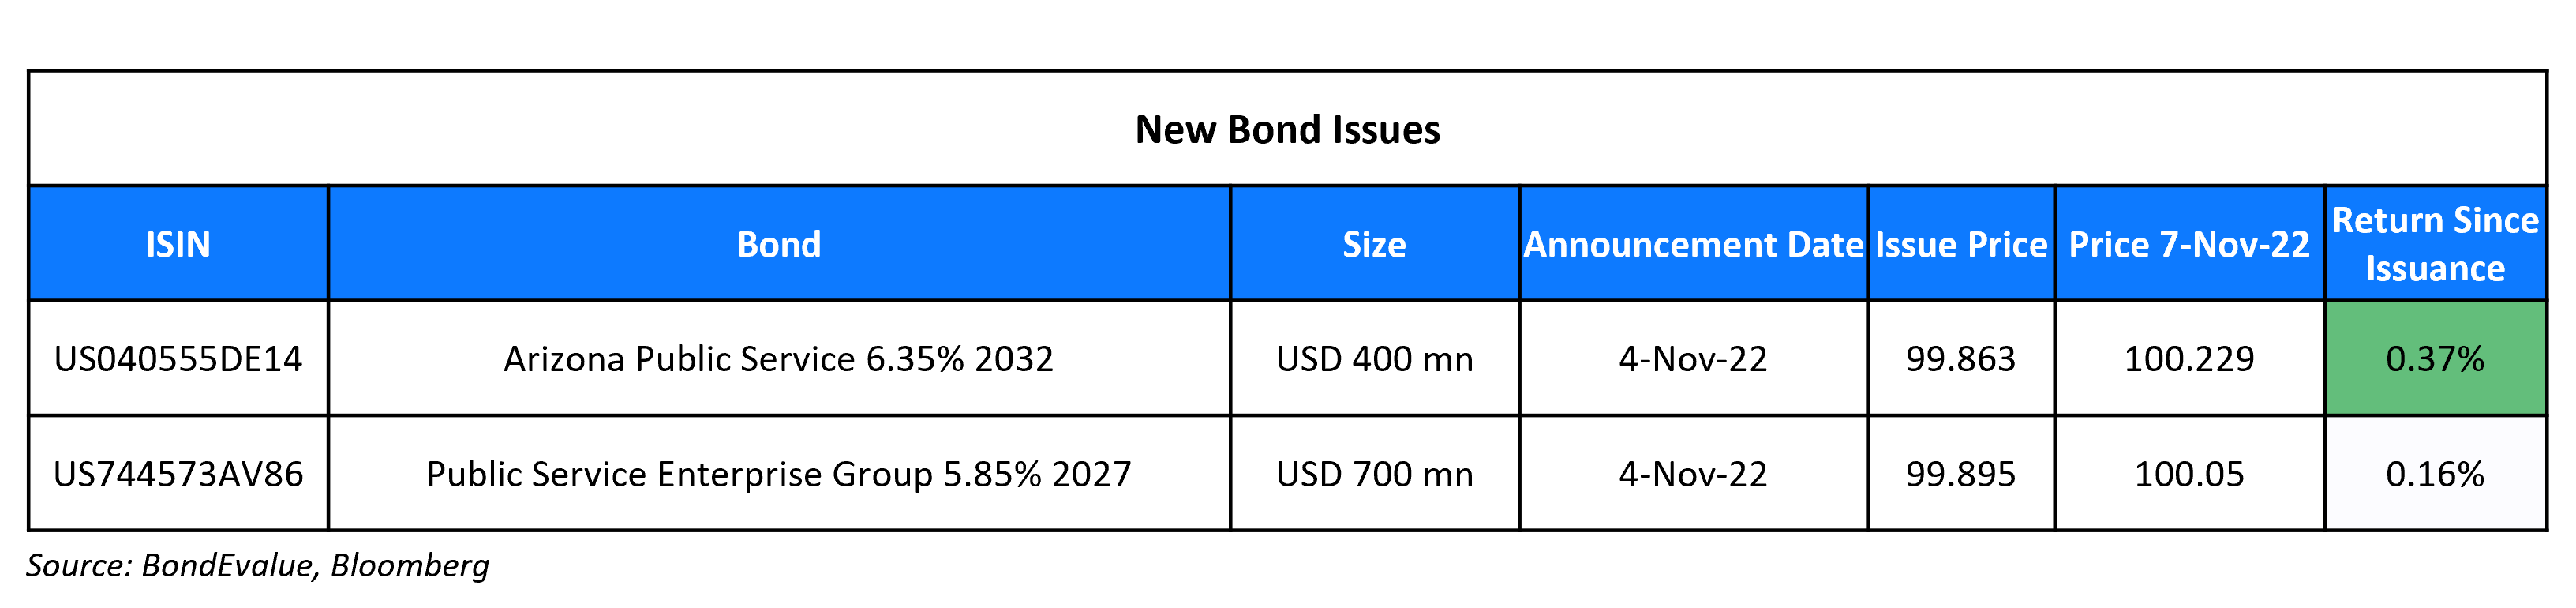 New Bond Issues 7 Nov 22